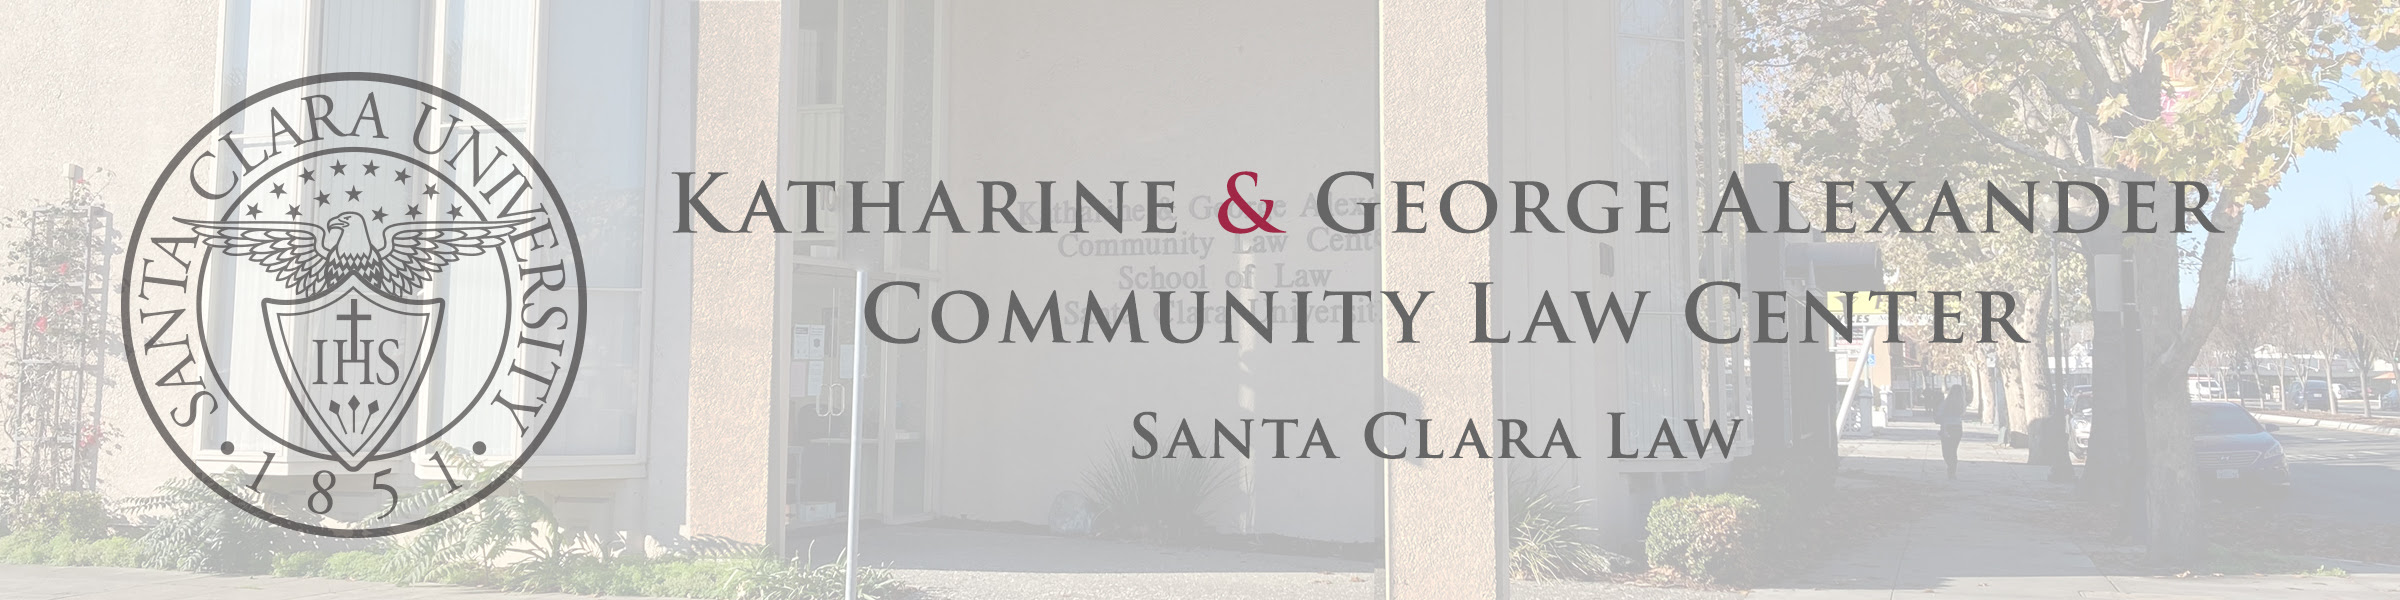 Katharine & George Alexander Community Law Center October 2020 Enewsletter